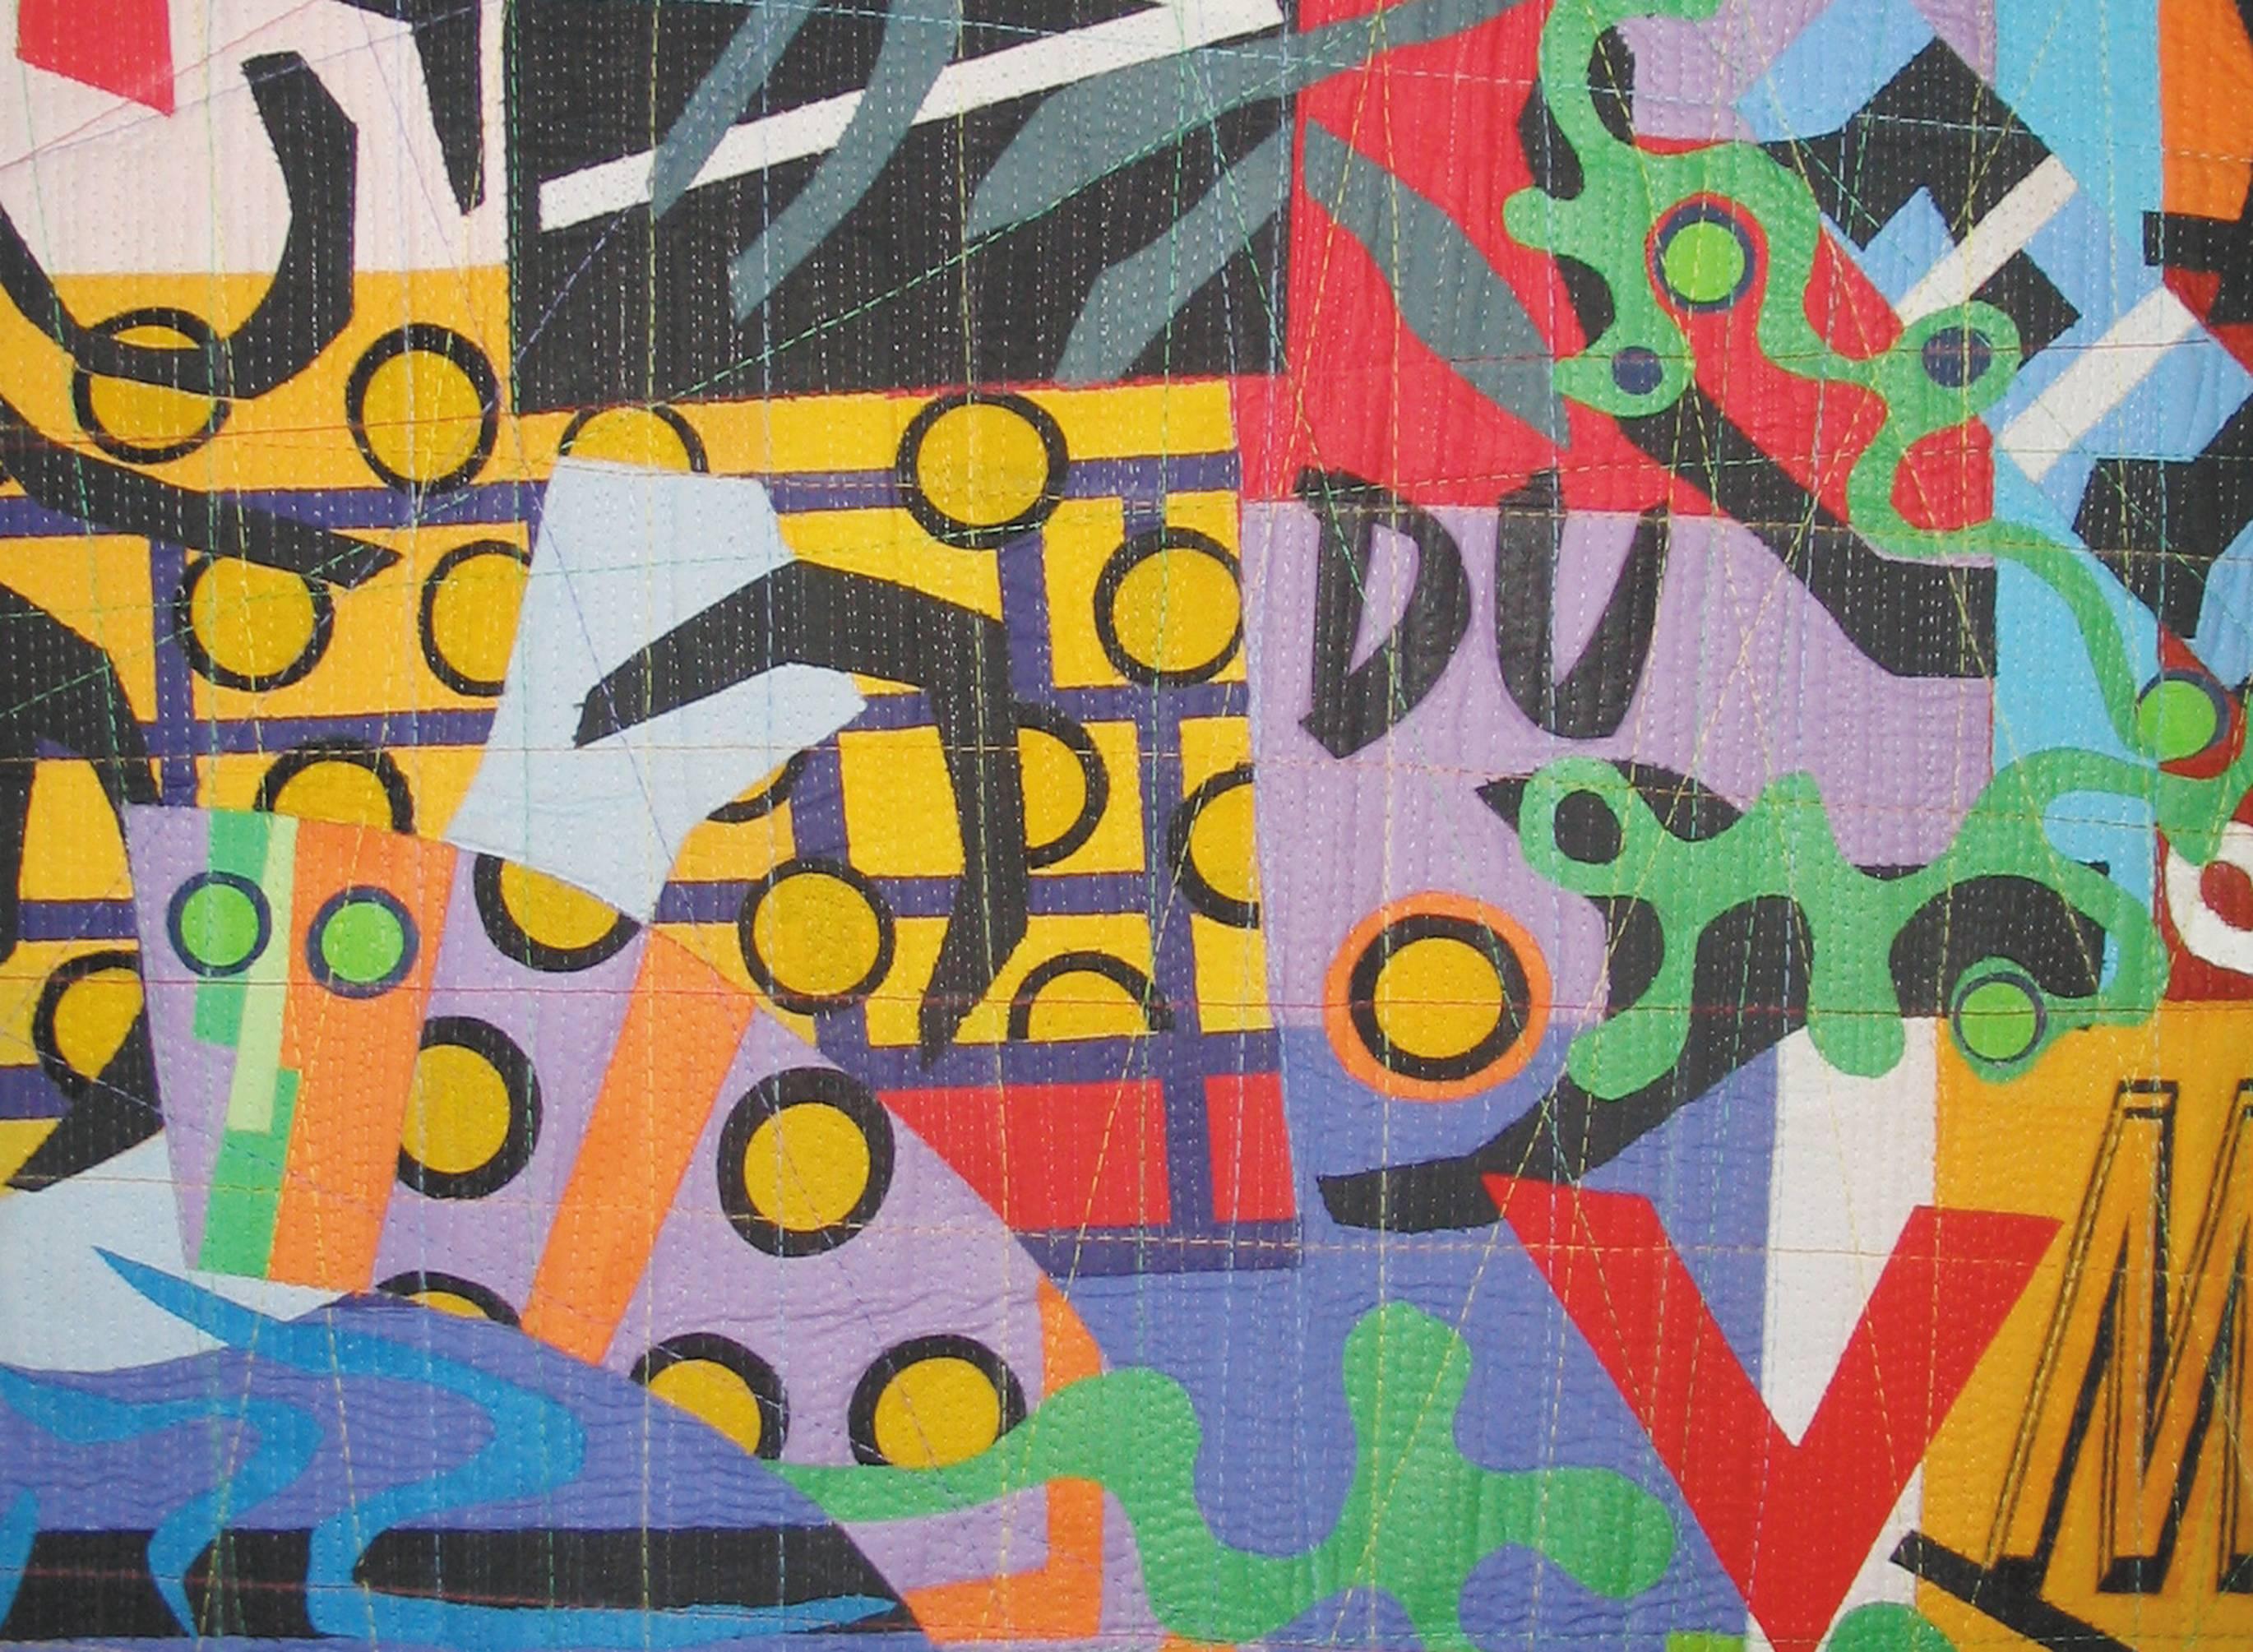 Taffiti Graffiti, quilt contemporain - Abstrait Mixed Media Art par Bethan Ash